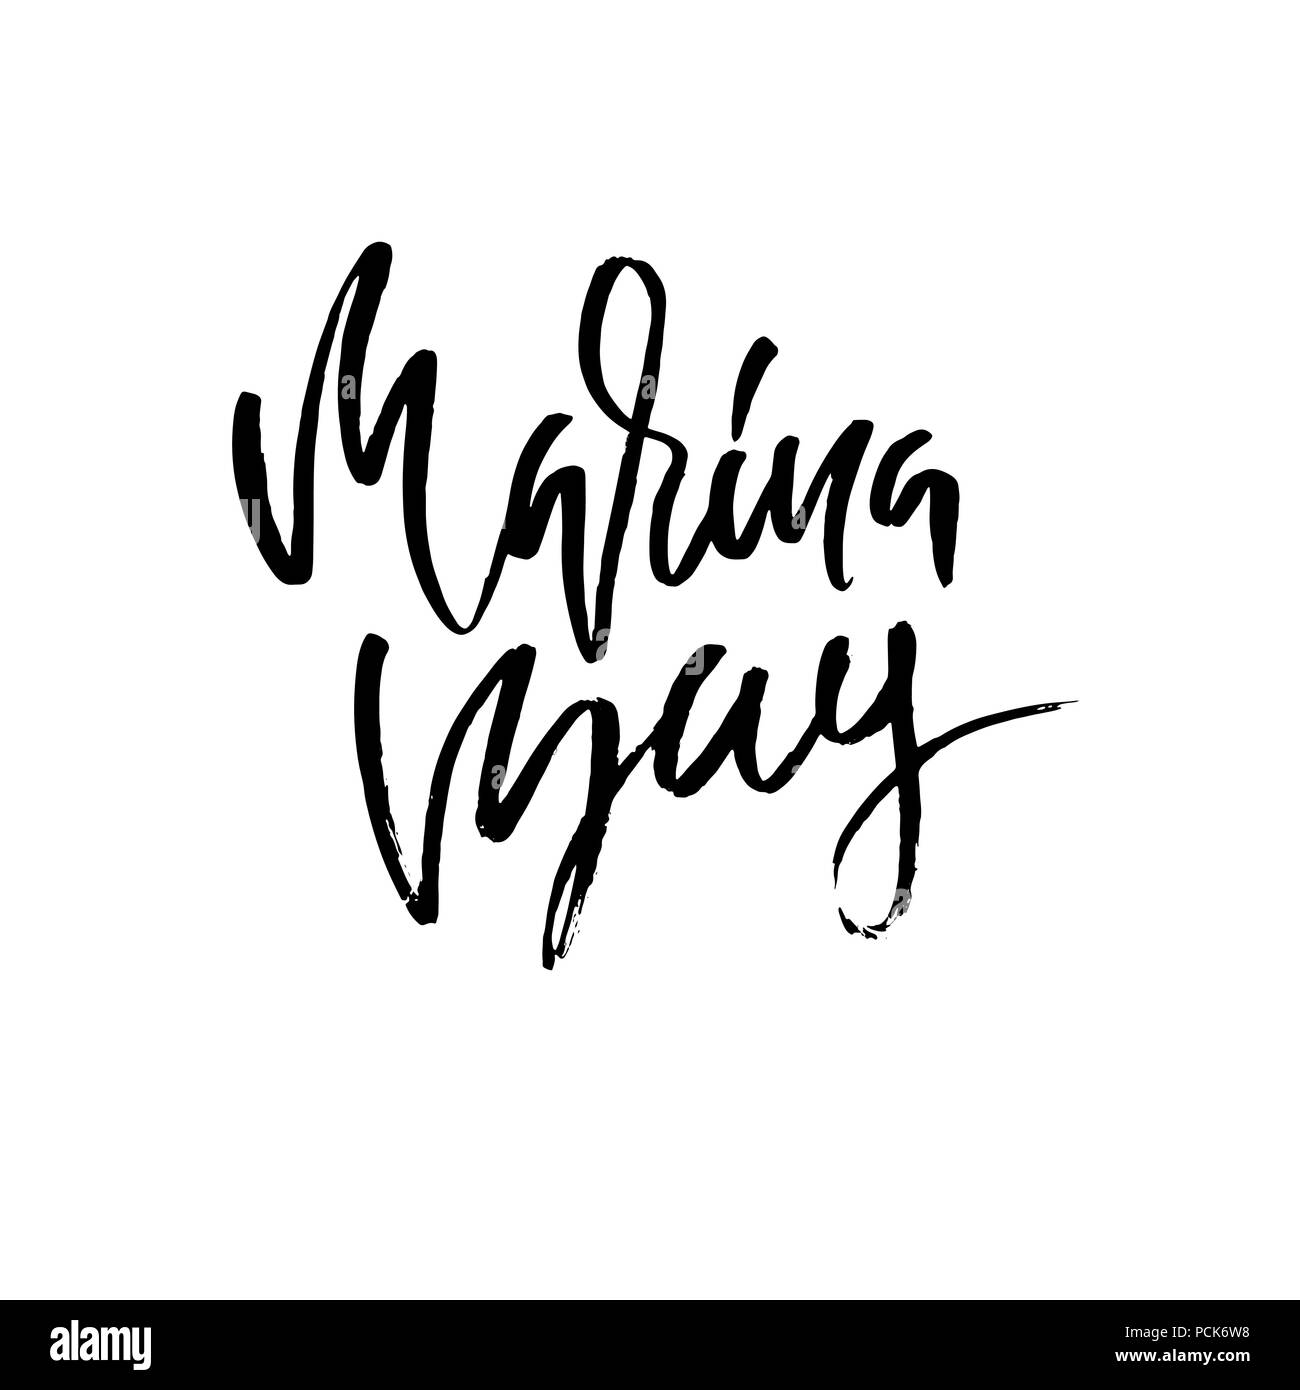 Il Marina Bay lettering. Spazzola moderno lettering. Illustrazione Vettoriale. Illustrazione Vettoriale